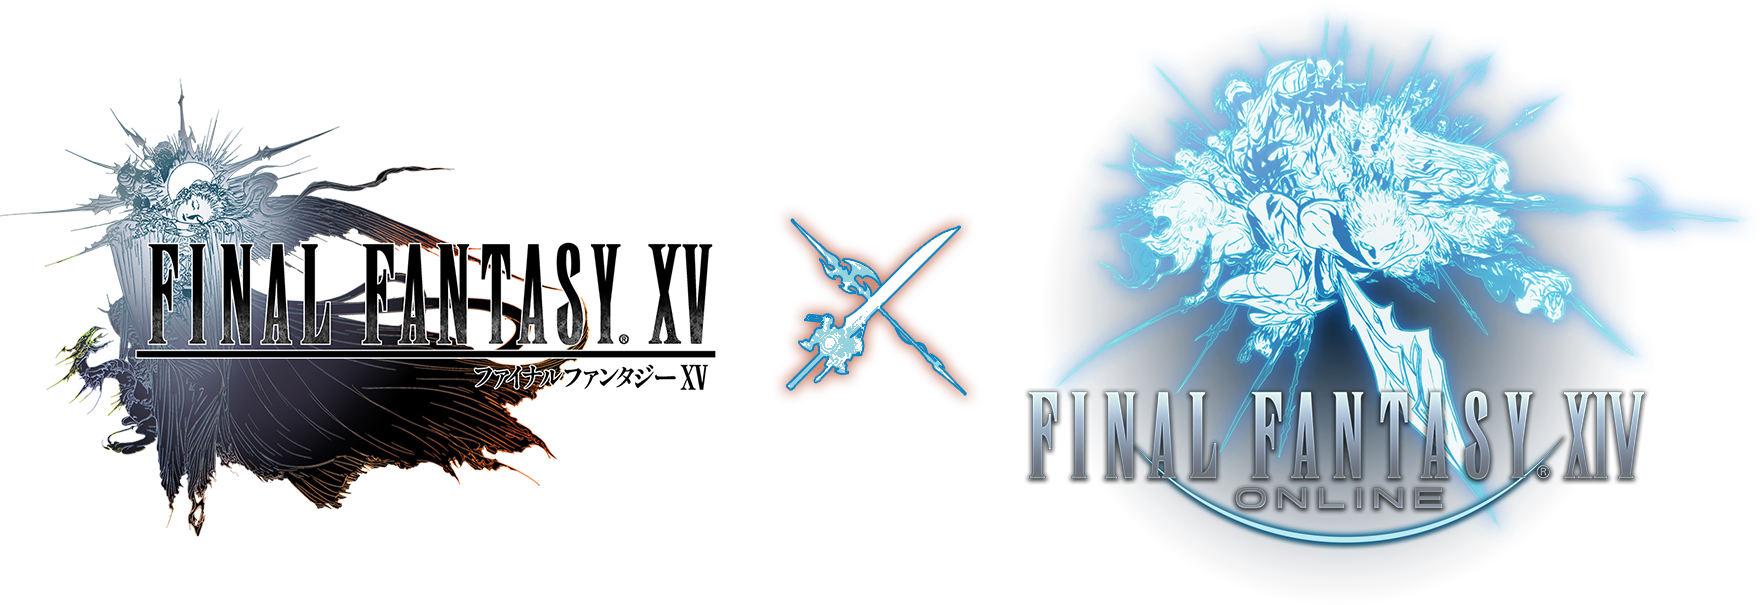 Final Fantasy Xv Final Fantasy Xiv コラボレーション インフォメーション ファイナルファンタジーxv ユニバース ポータルサイト Square Enix